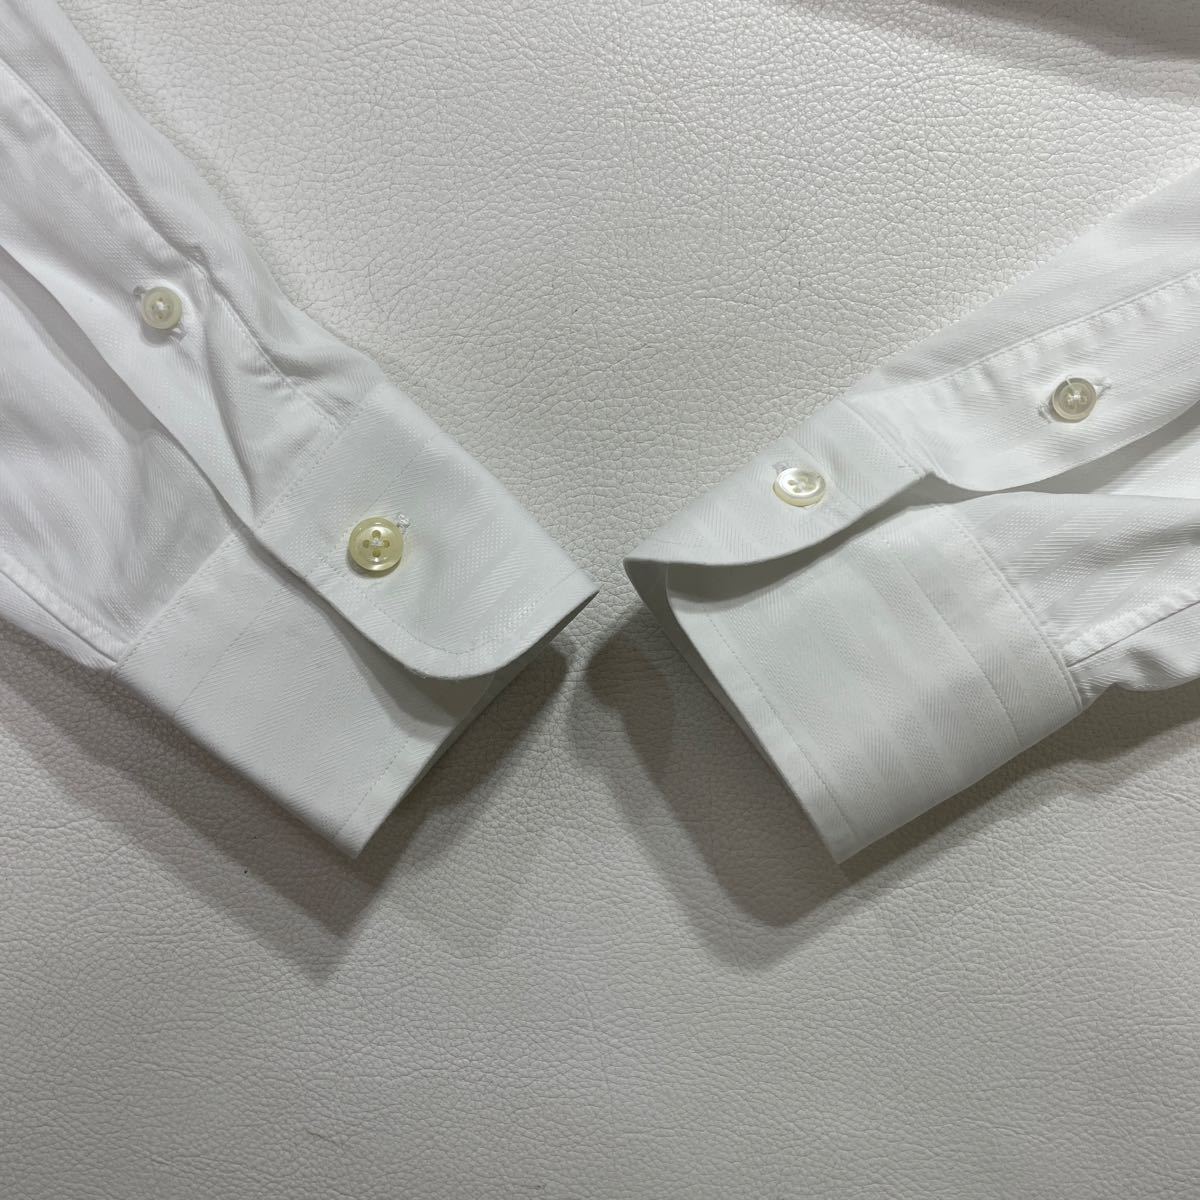 259 Maker's Shirt 鎌倉 メーカーズシャツ カマクラ 長袖 ワイシャツ 日本製 ビジネス オフィス コットン ホワイト 白 40222S_画像5